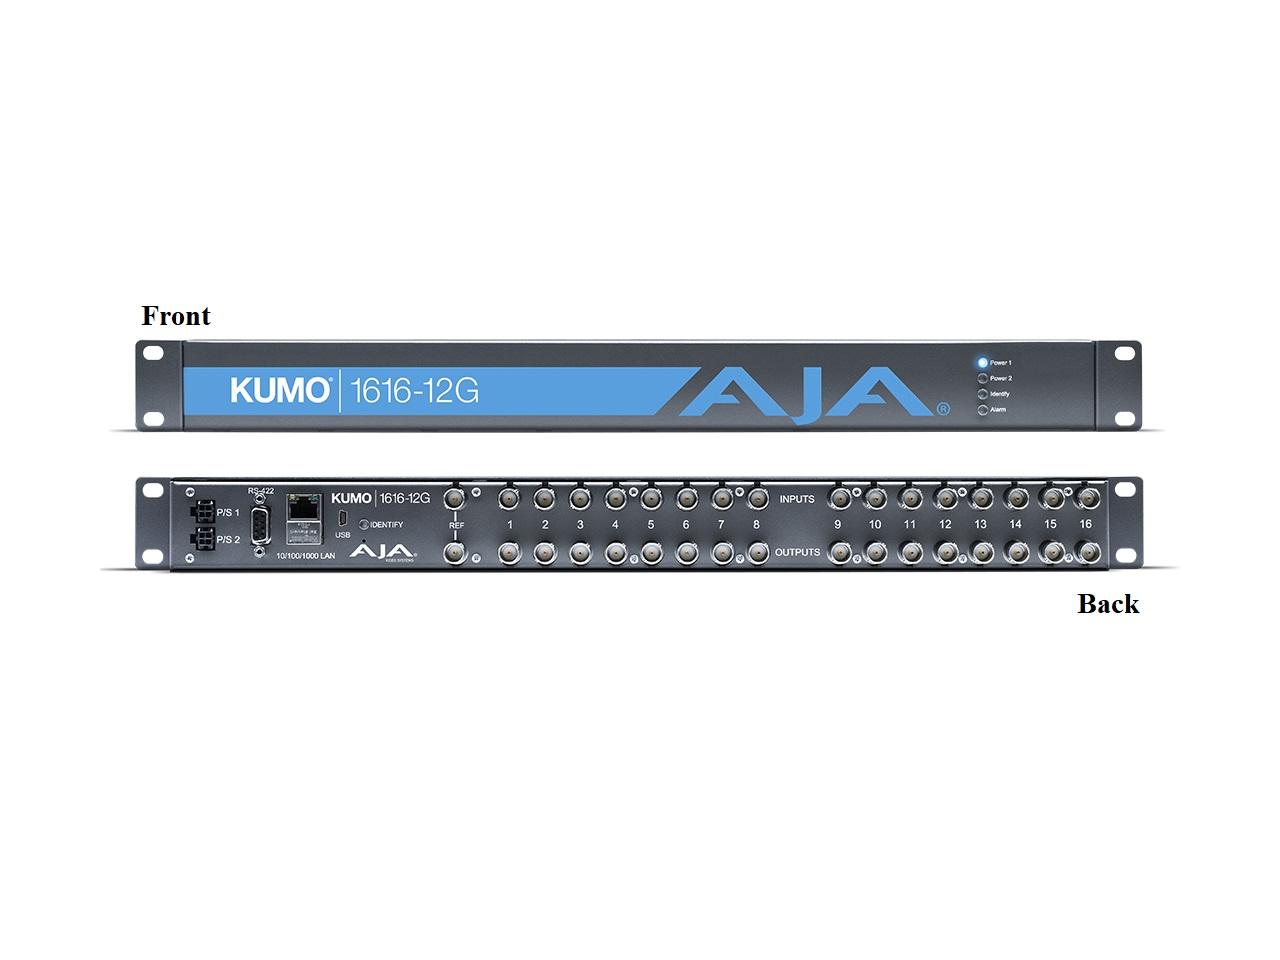 KUMO 1616-12G Compact 16x16 12G-SDI Router by AJA